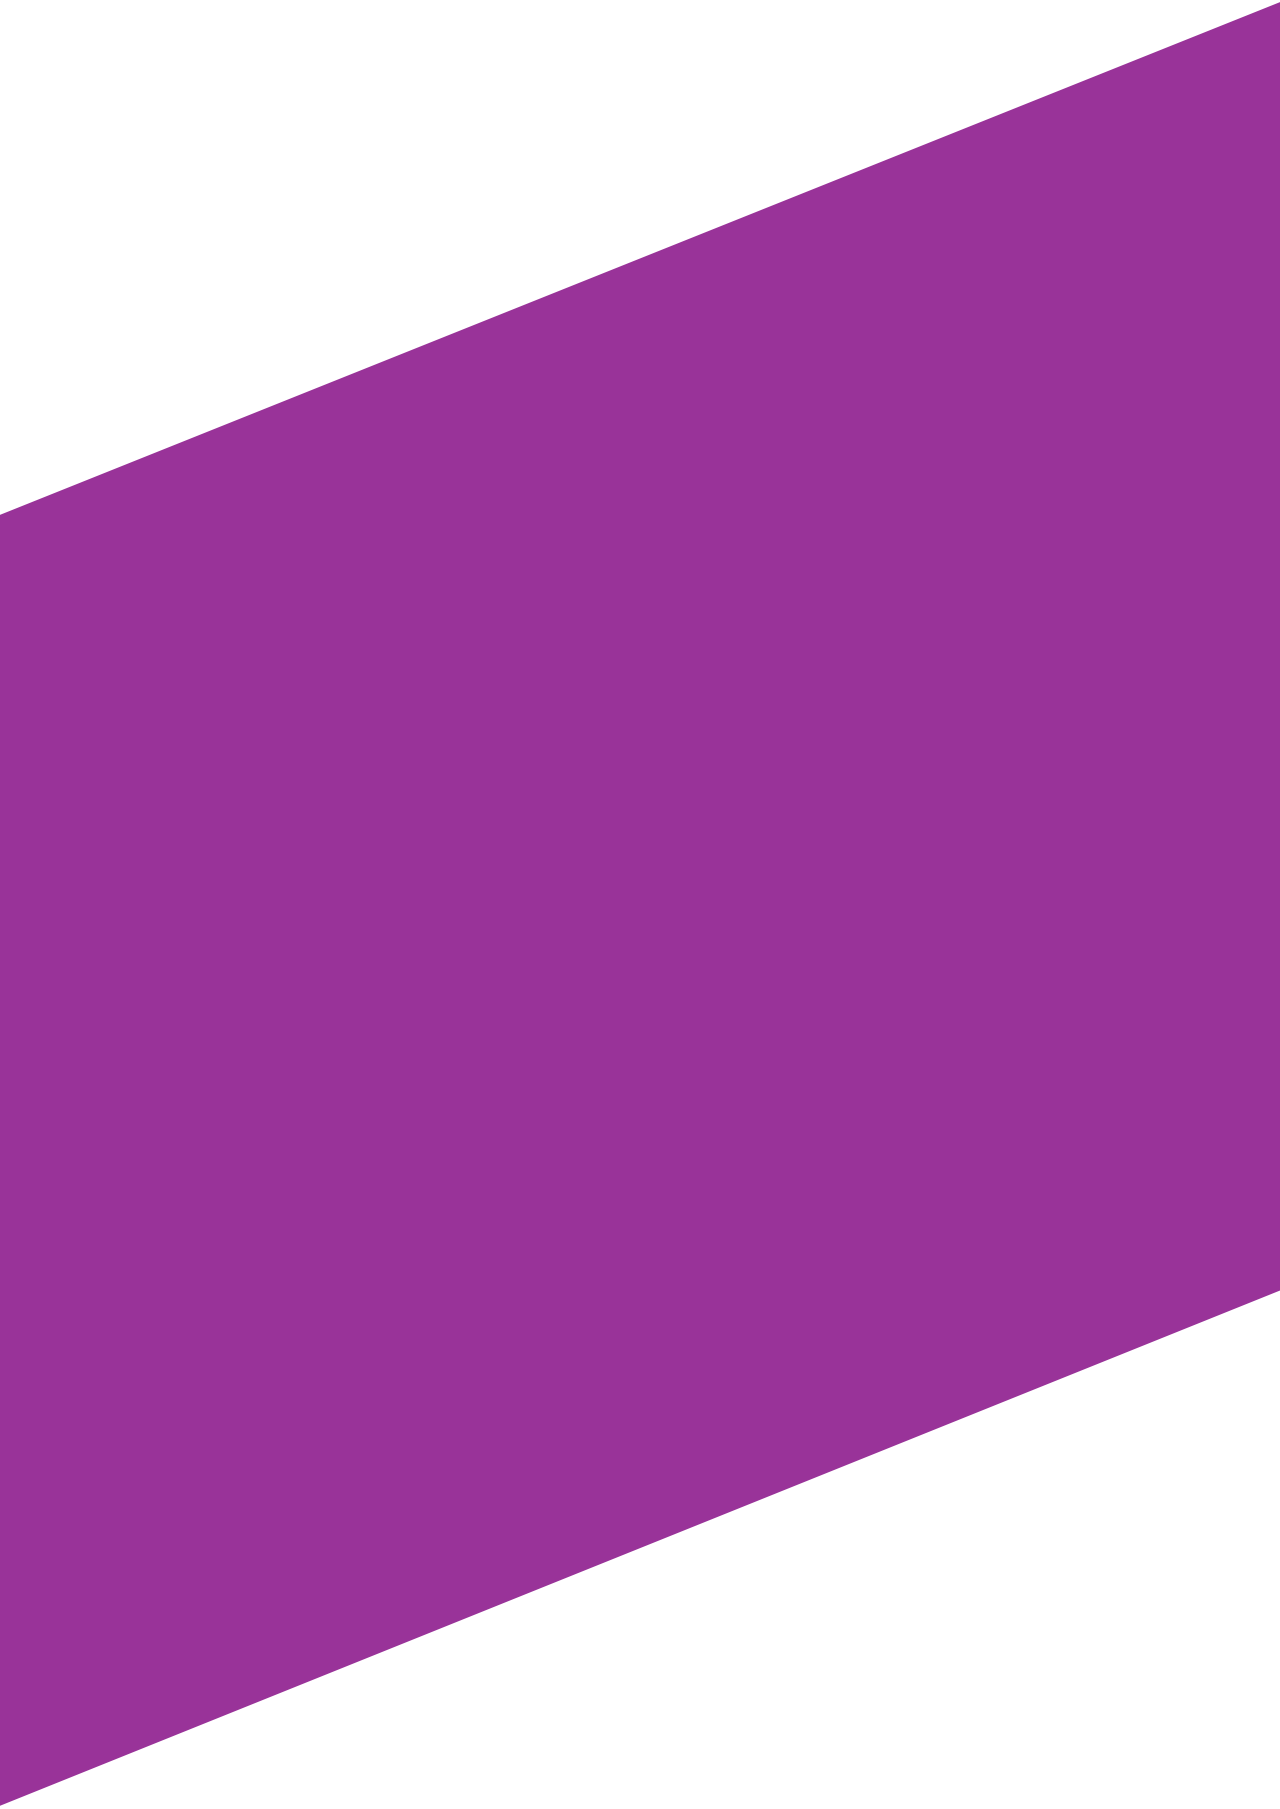 lego clipart purple